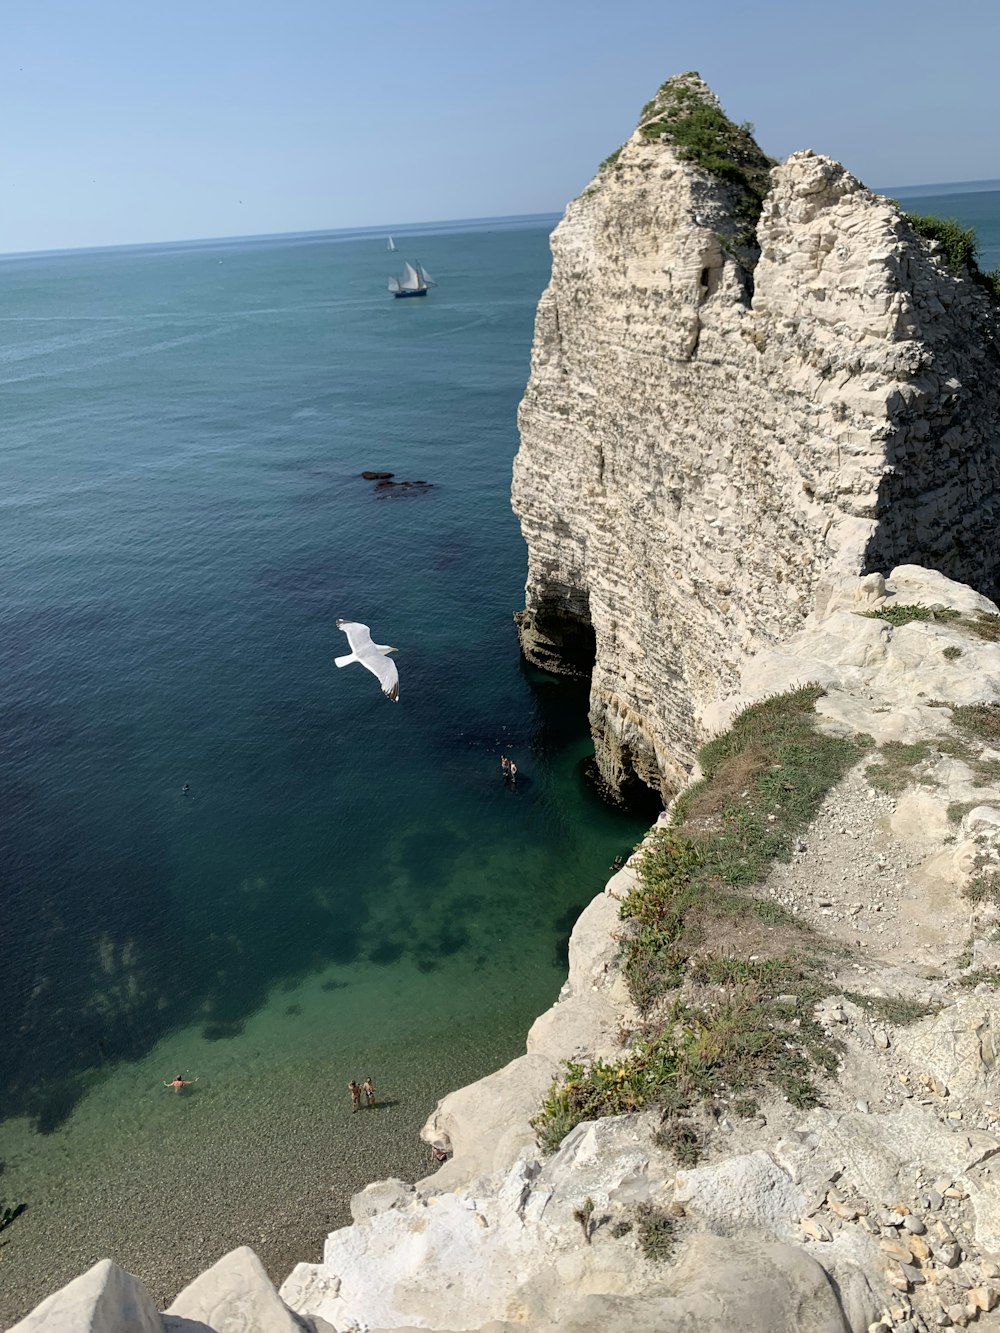 pássaro branco voando sobre o mar durante o dia